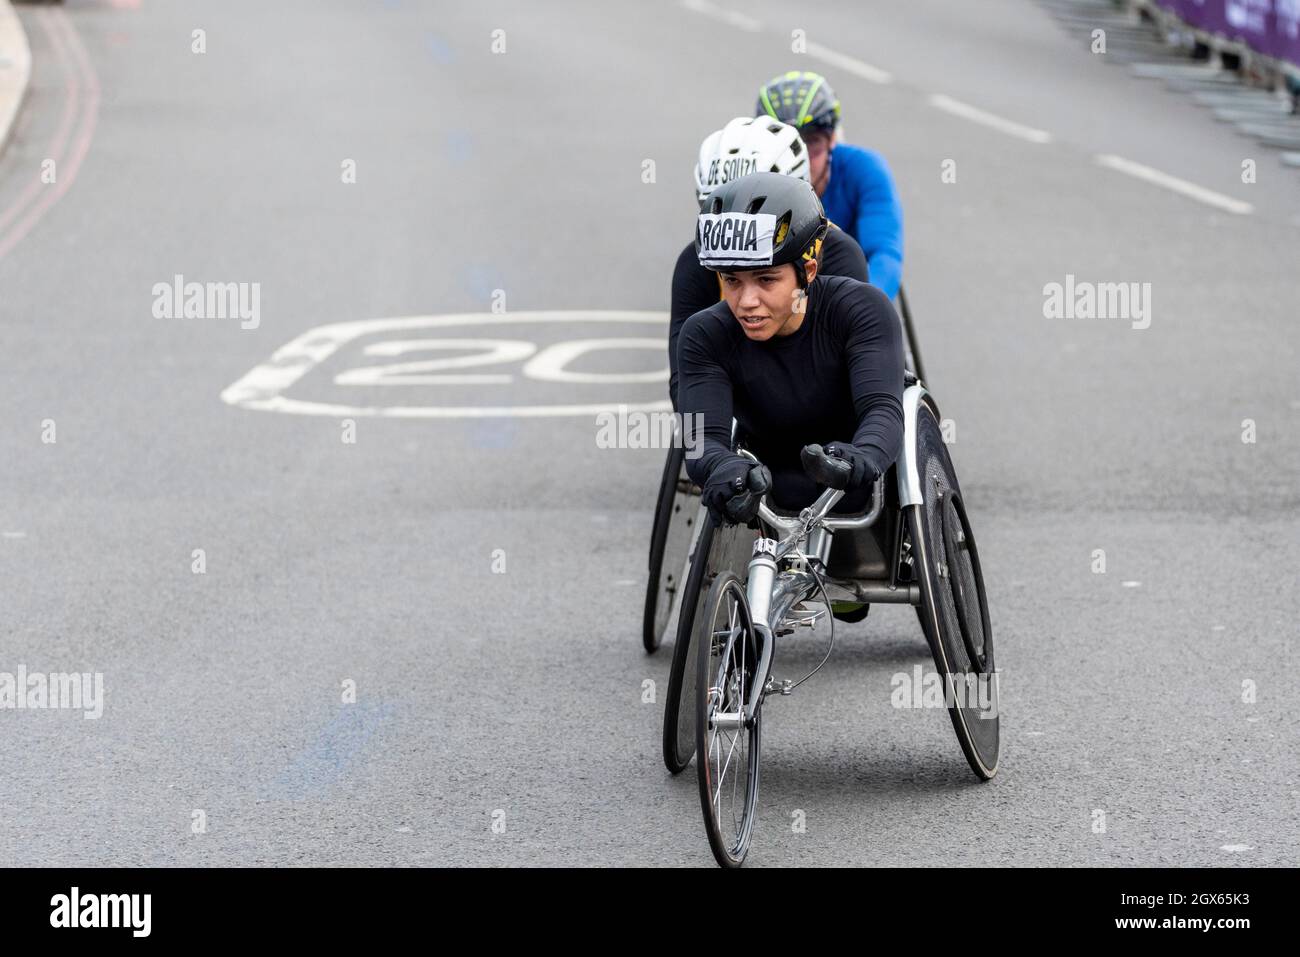 Aline Rocha racing in the Virgin Money London Marathon 2021 wheelchair race, in Tower Hill, London, UK. Wheelchair athlete Stock Photo